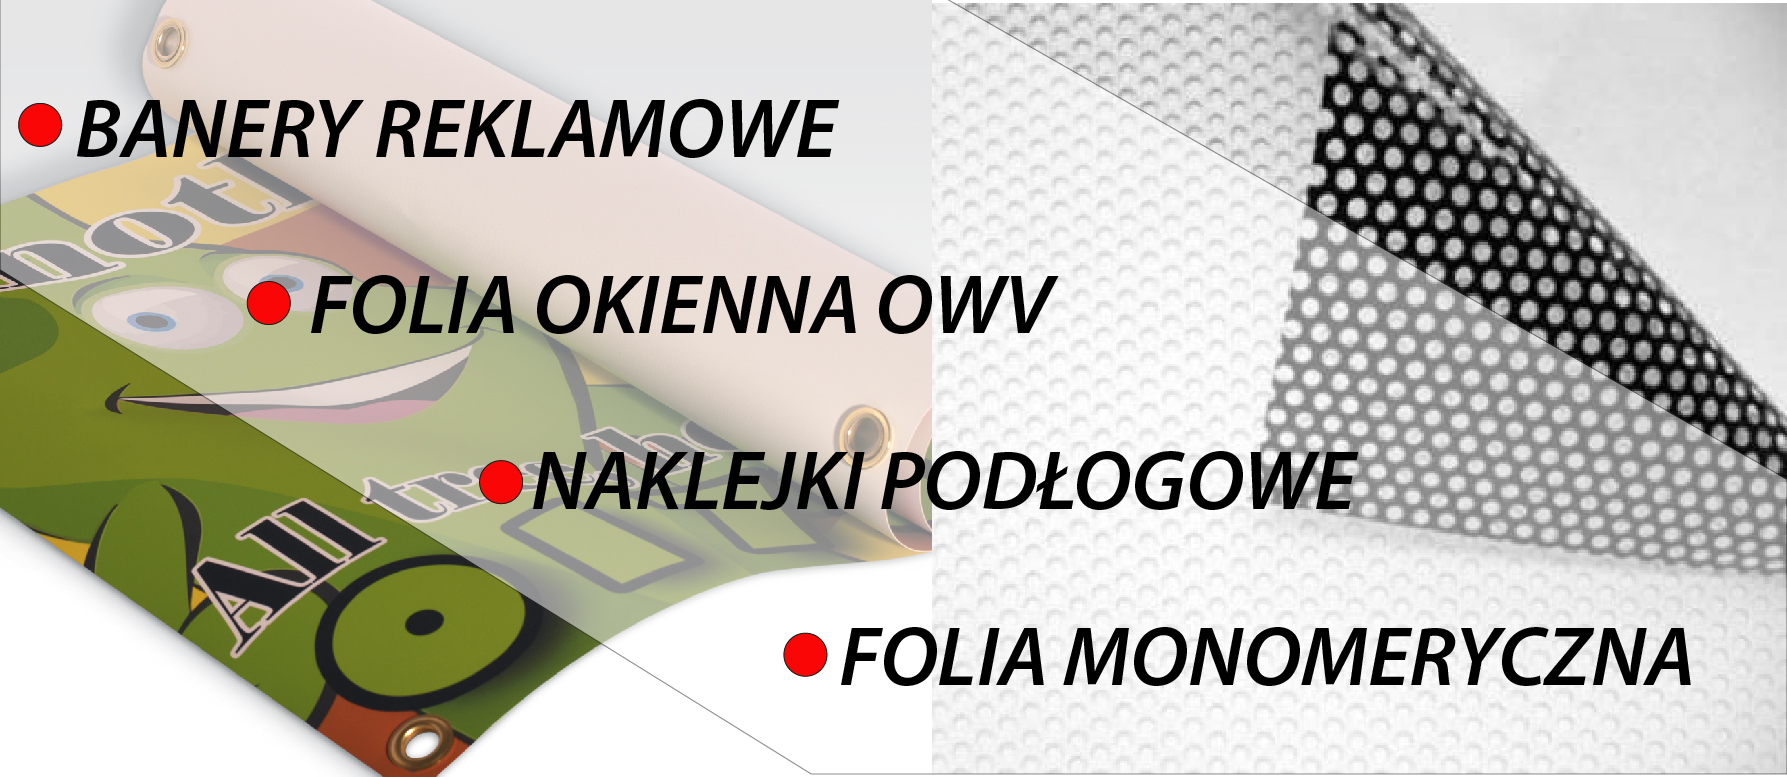 banery reklamowe w irollup.pl